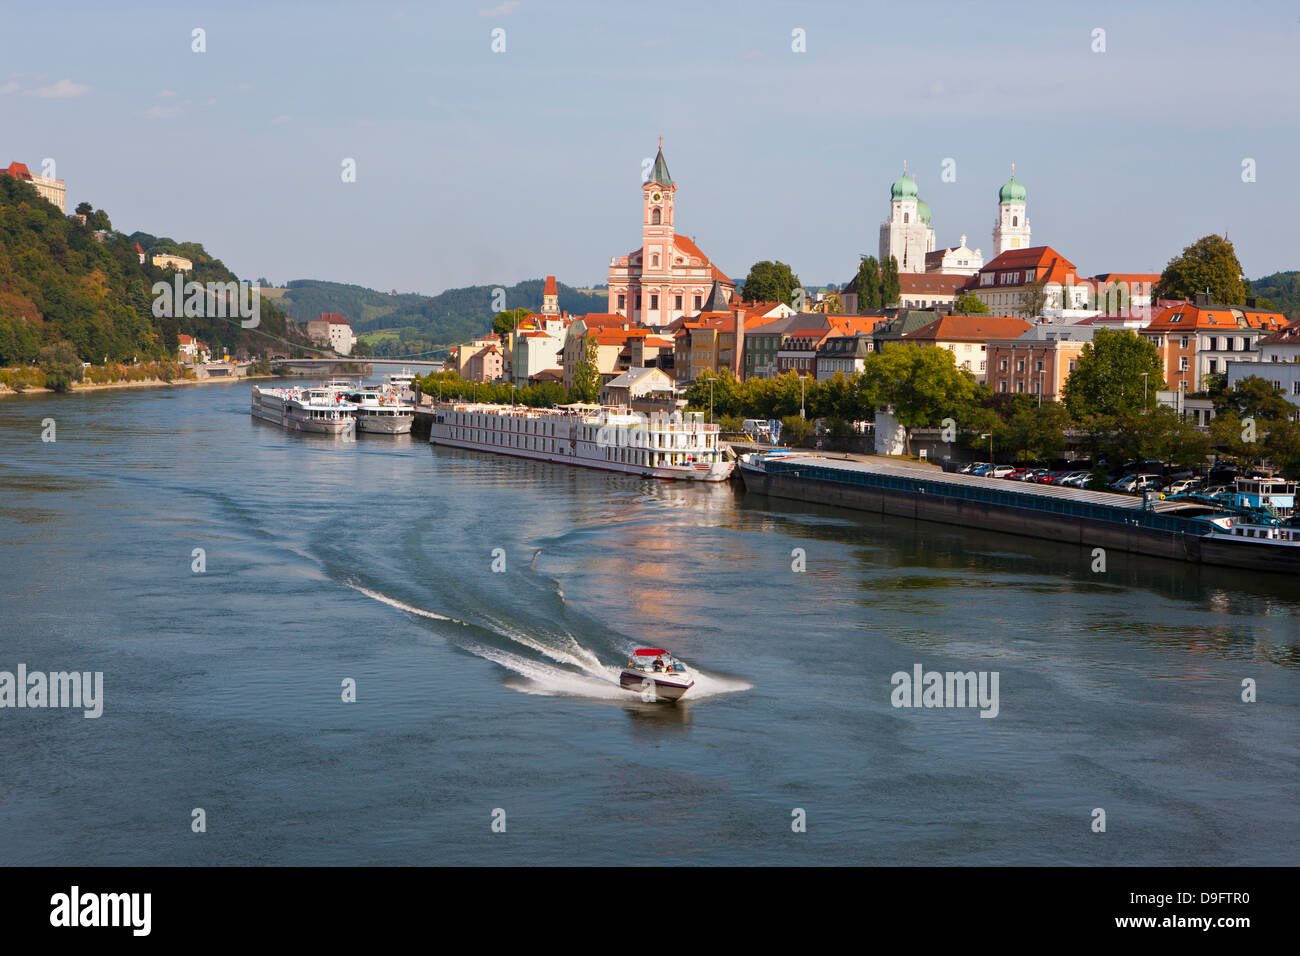 River Danube, Passau, Bavaria, Germany Stock Photo